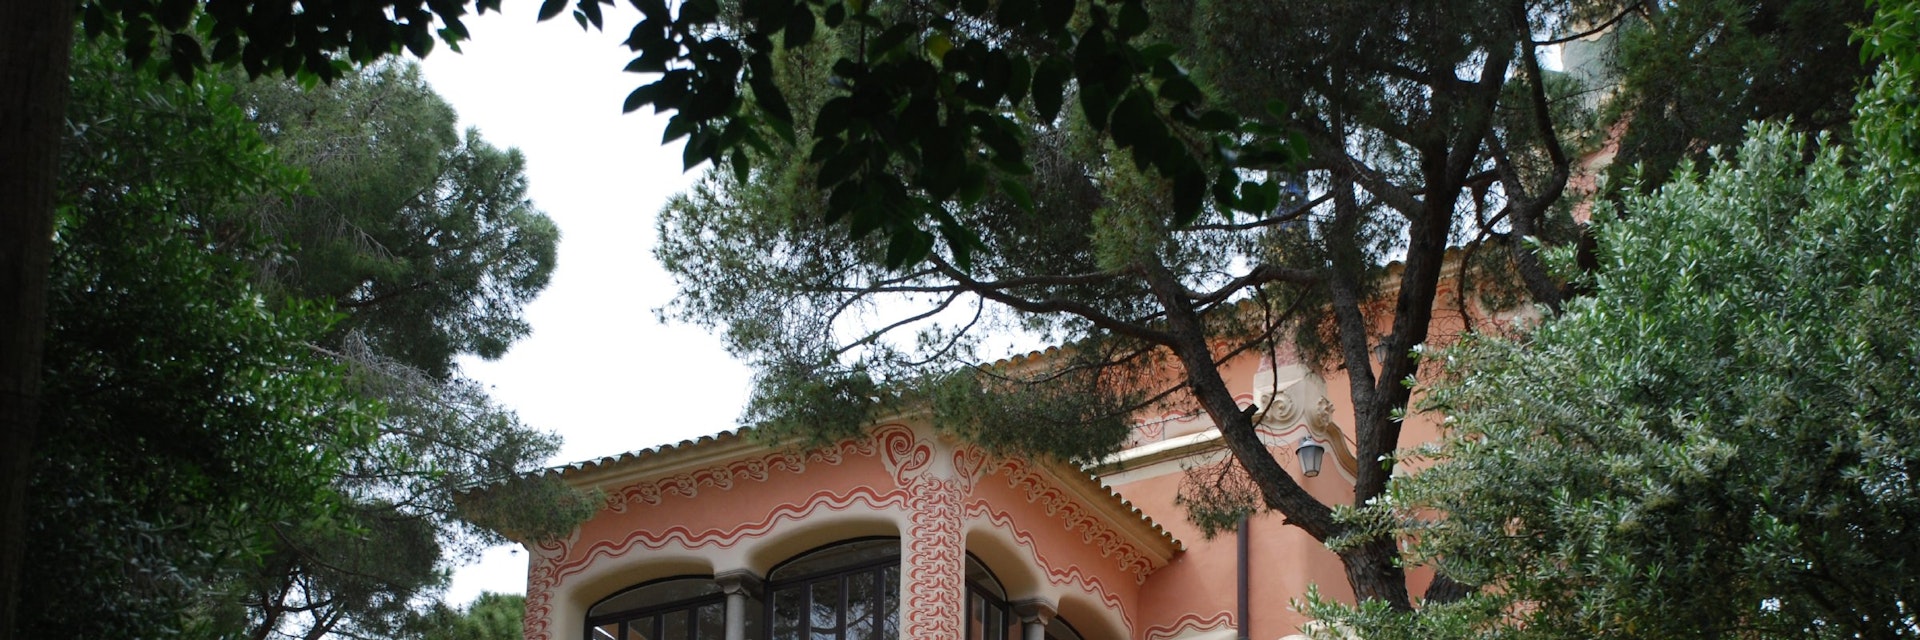 Casa-Museu Gaudí through the trees